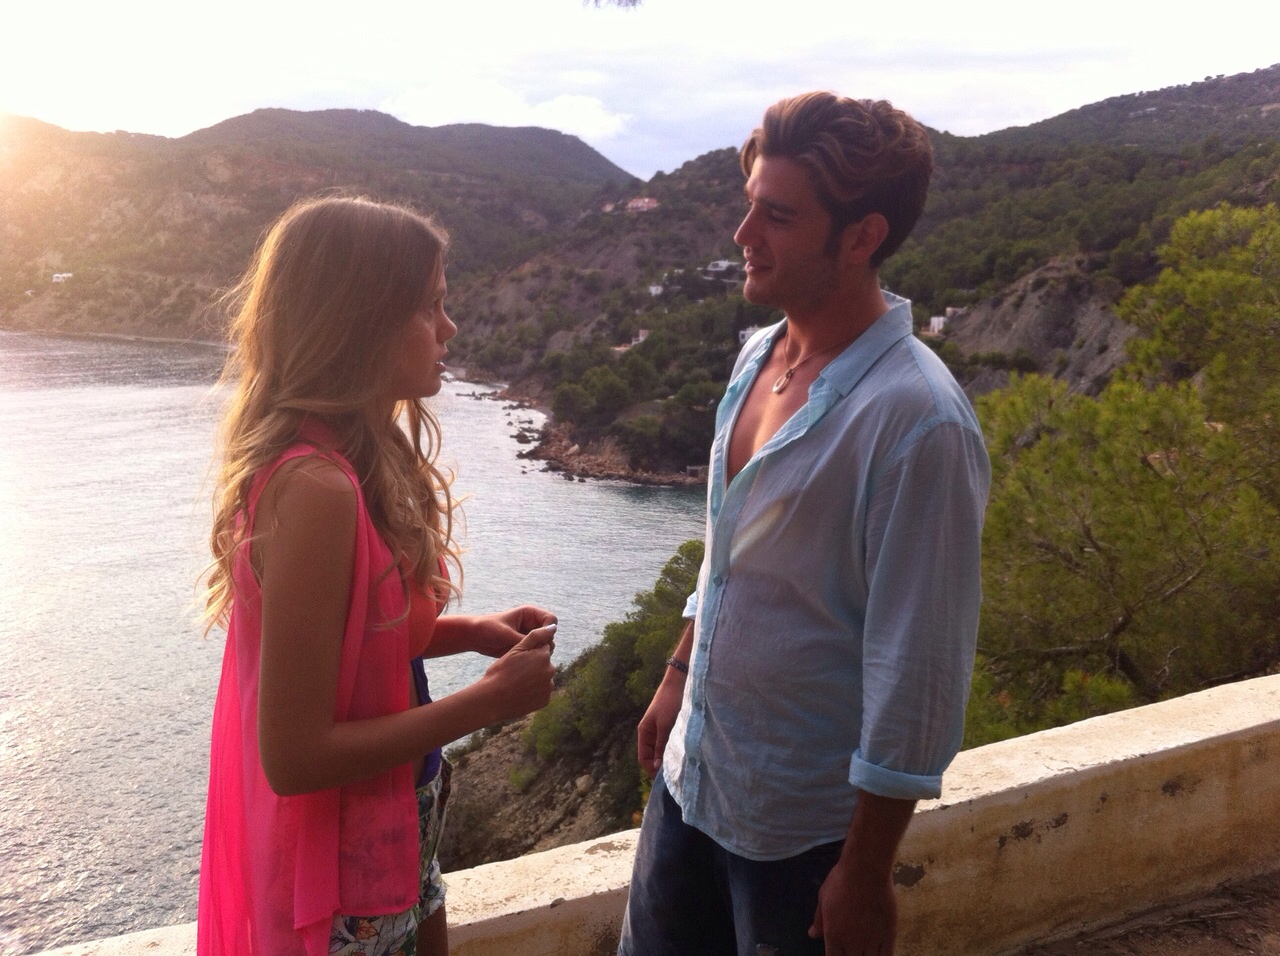 Ibiza (2015) director: Shay Kanot